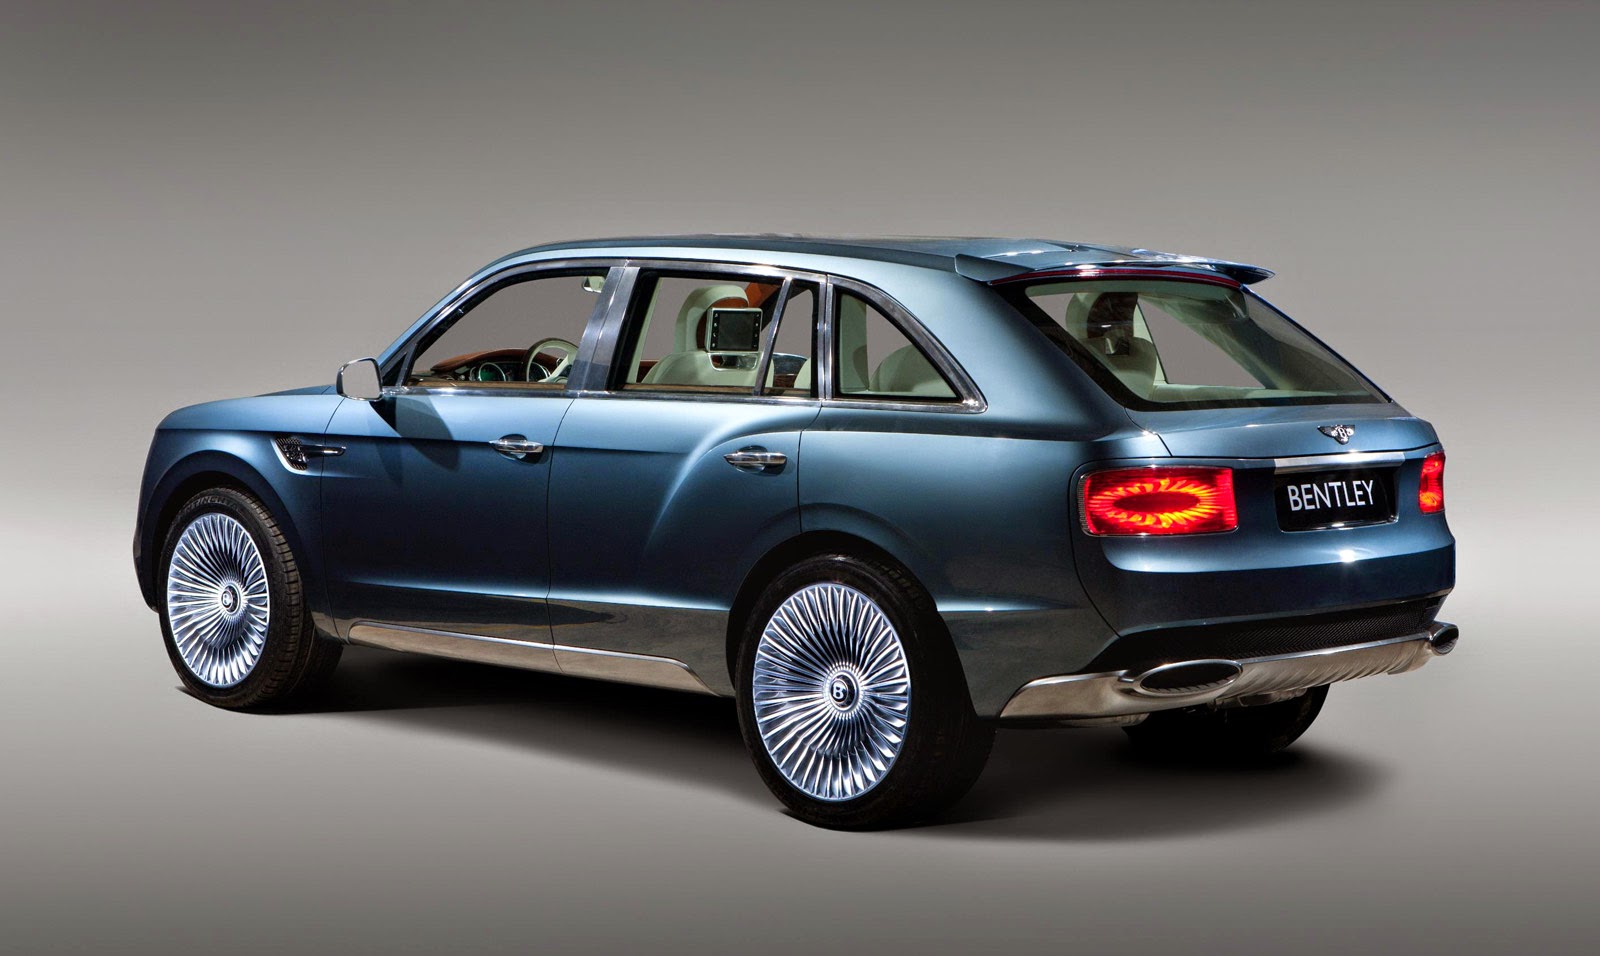 Smaller Bentley SUV To Follow FullSize Model